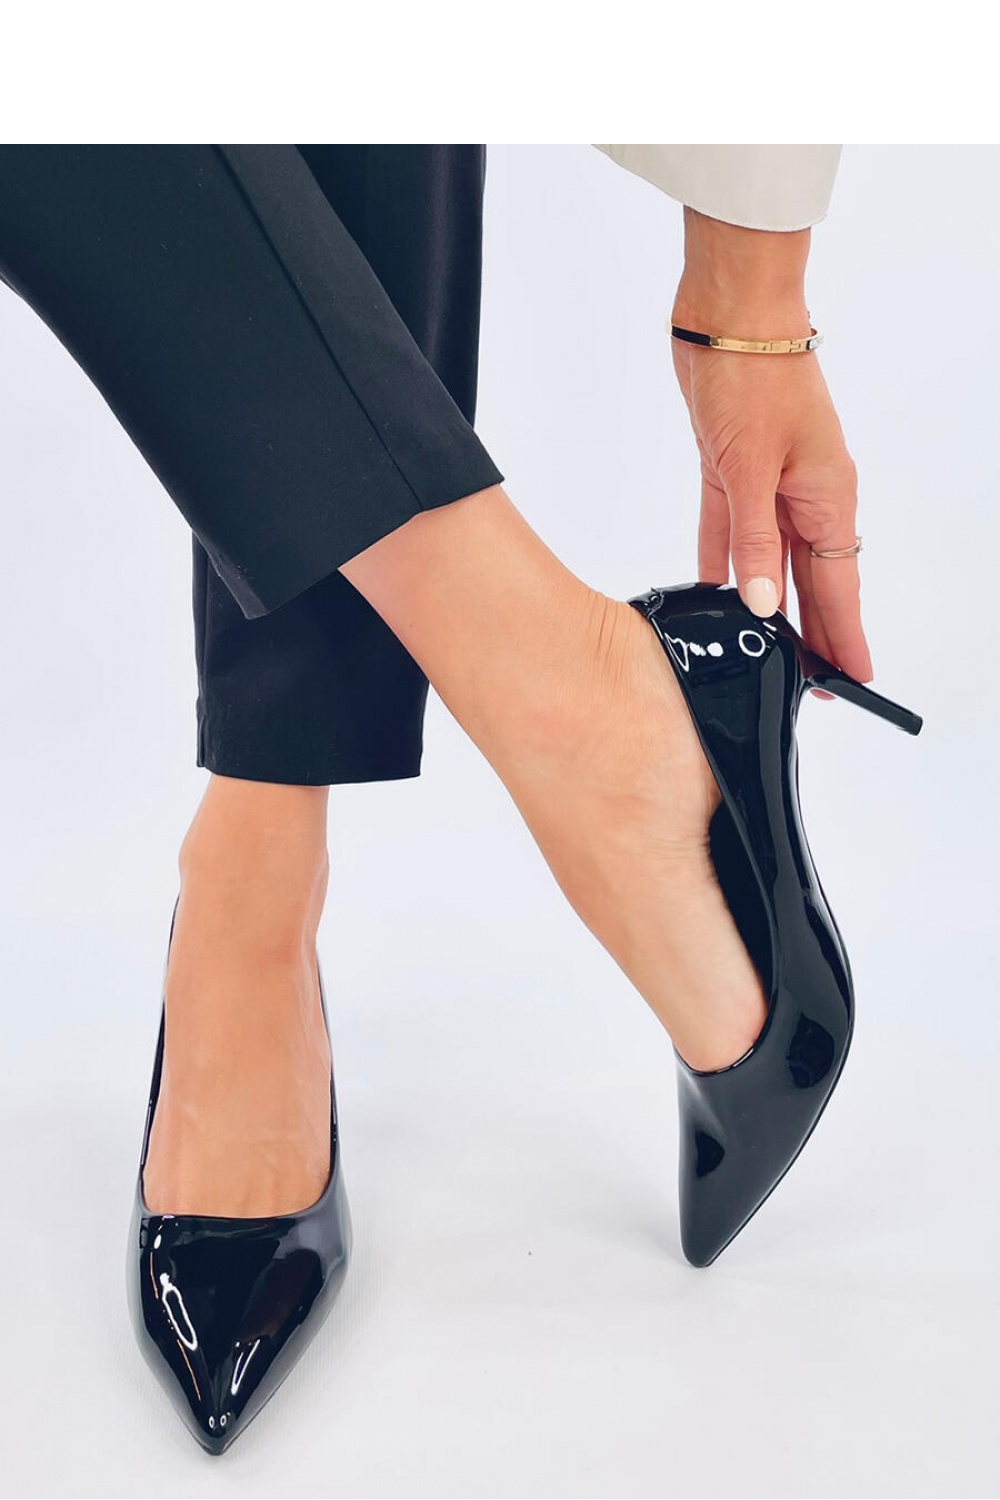  High heels model 192174 Inello  black